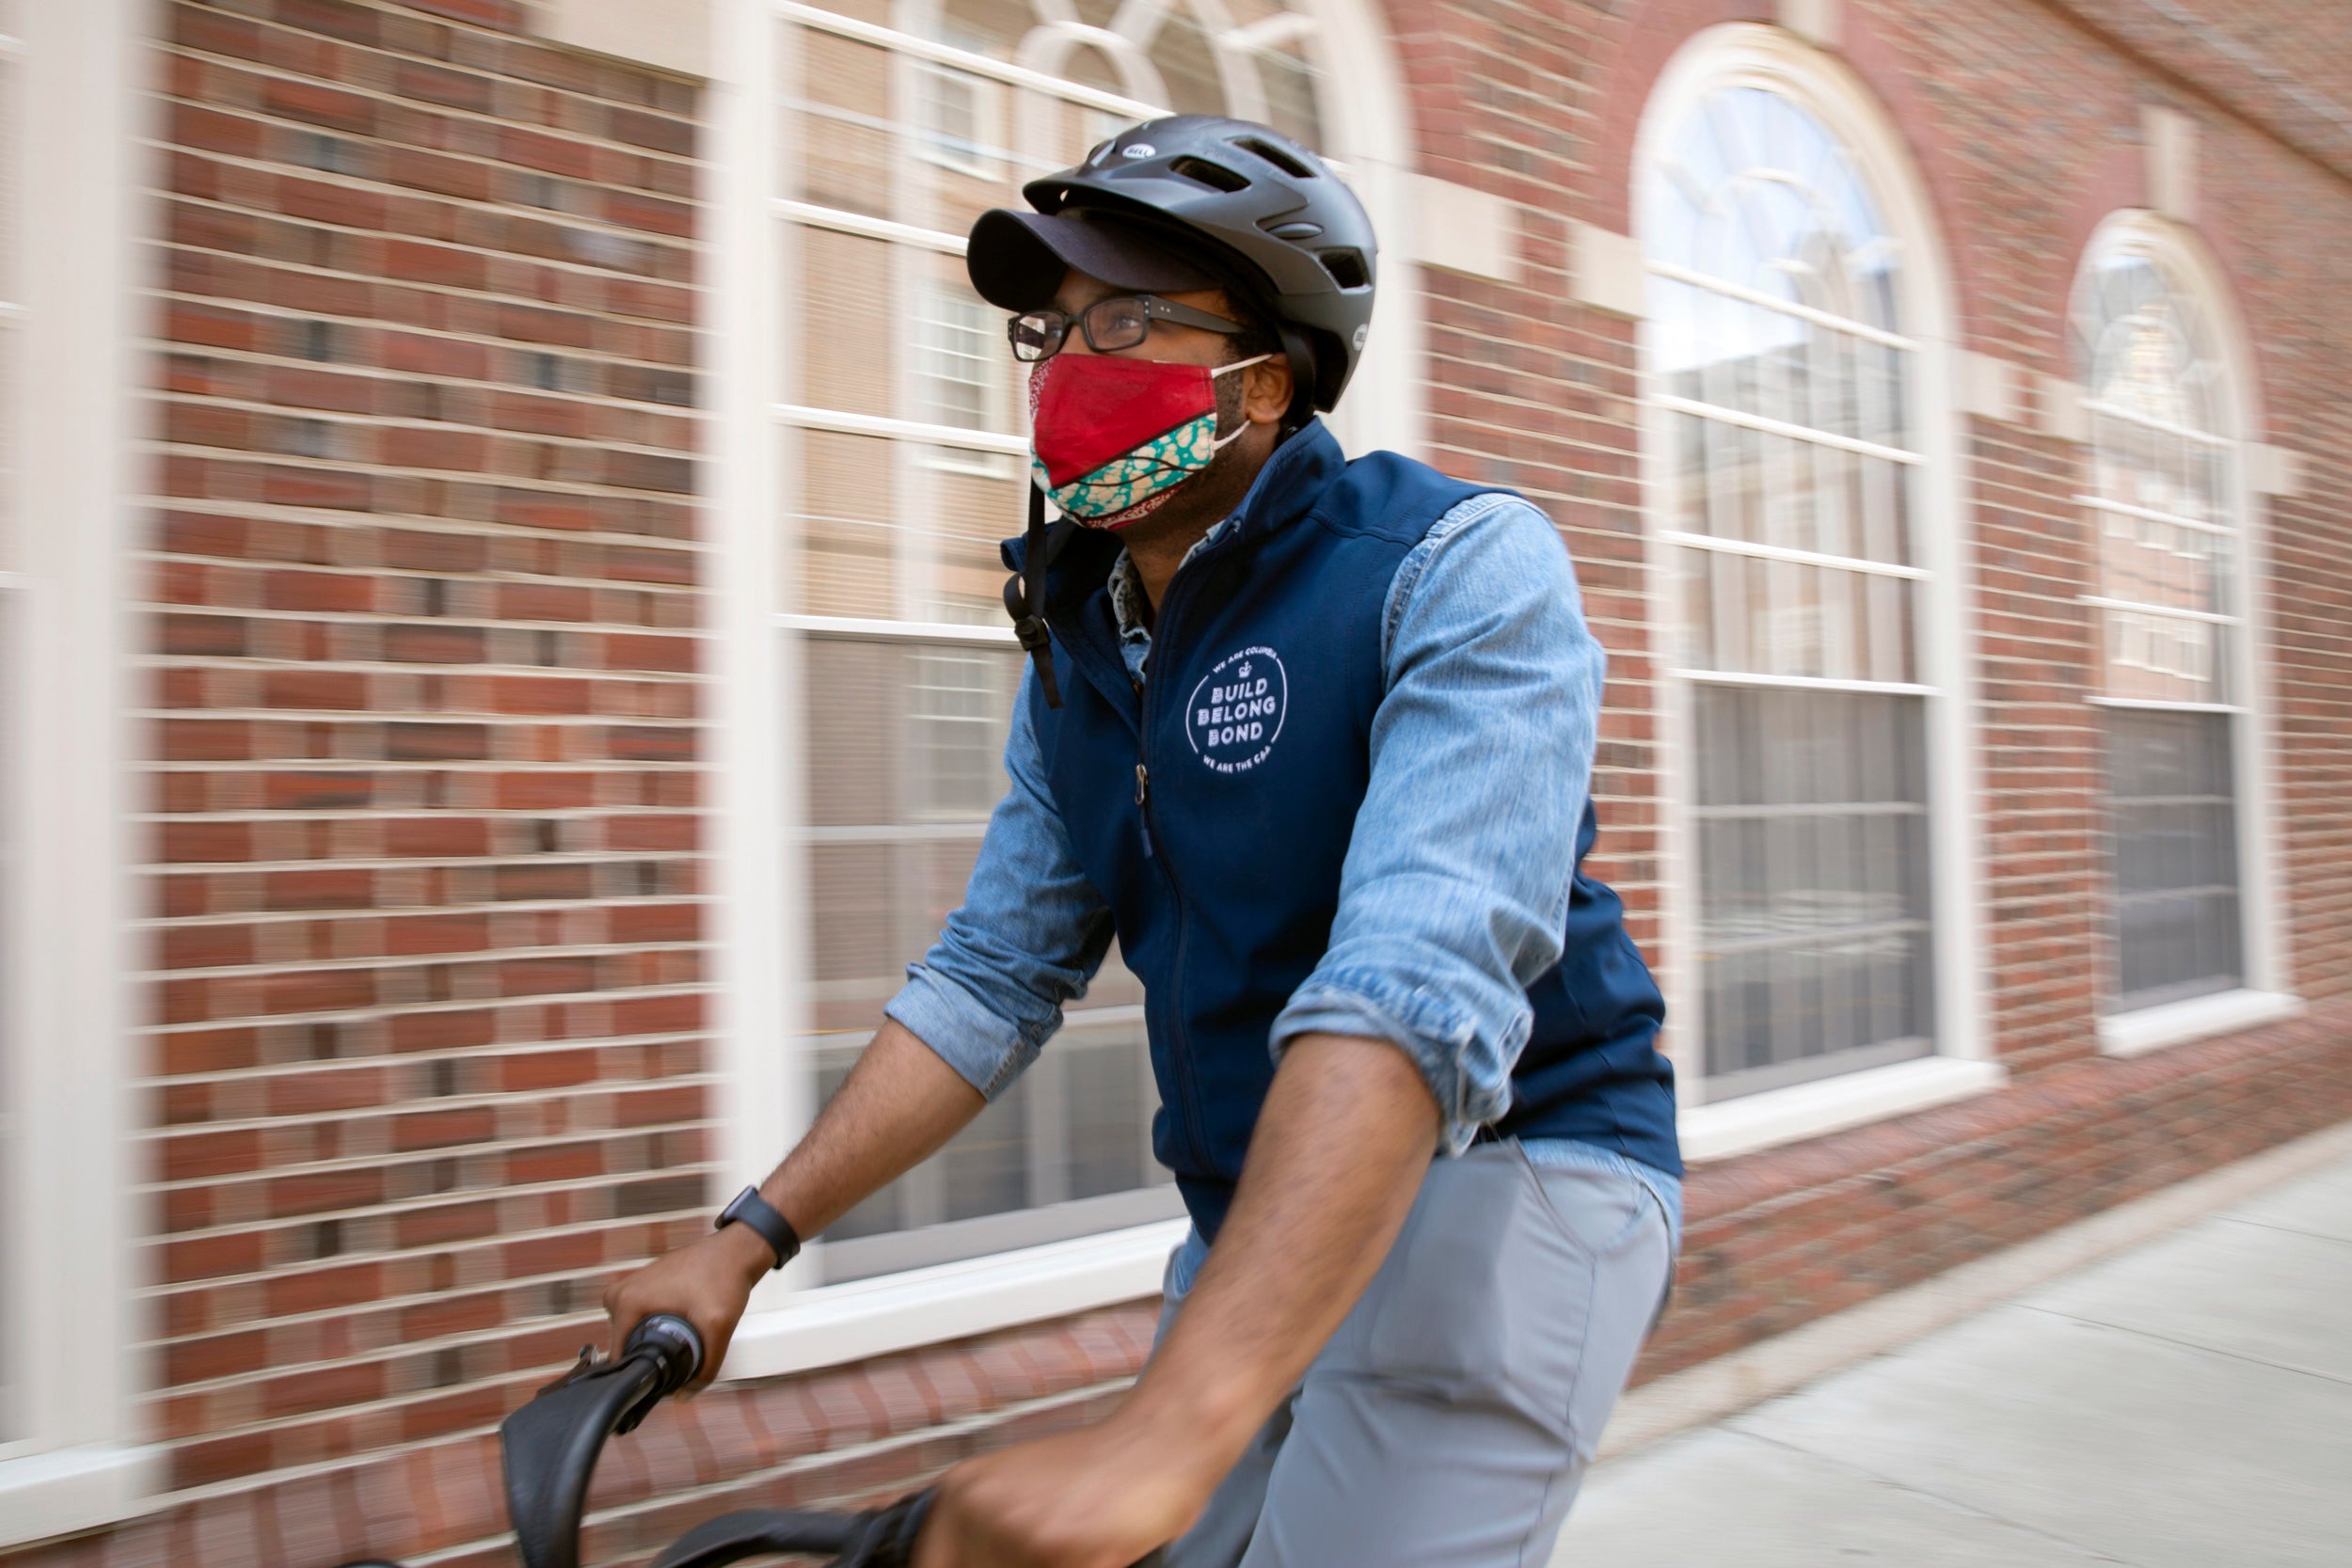 Darold Cuba, Harvard Kennedy School Mid career MPA rides a blue bike near Leverett House.